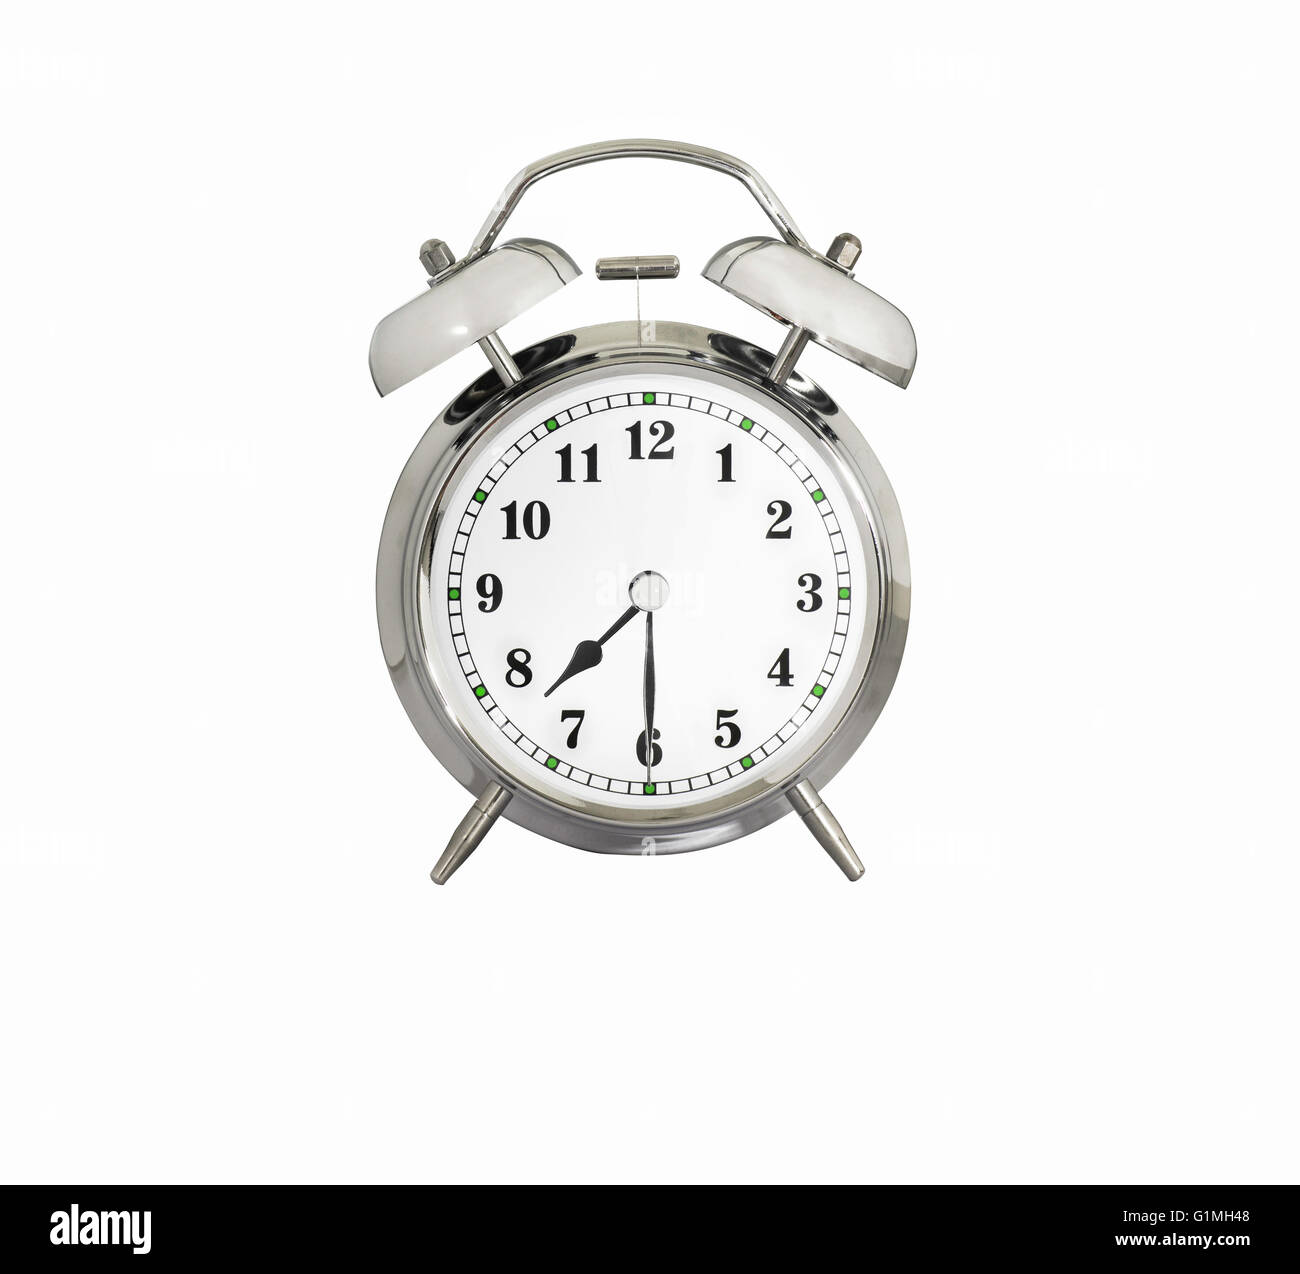 Traditional Alarm Clock Showing 7:30 Stock Photo - Alamy